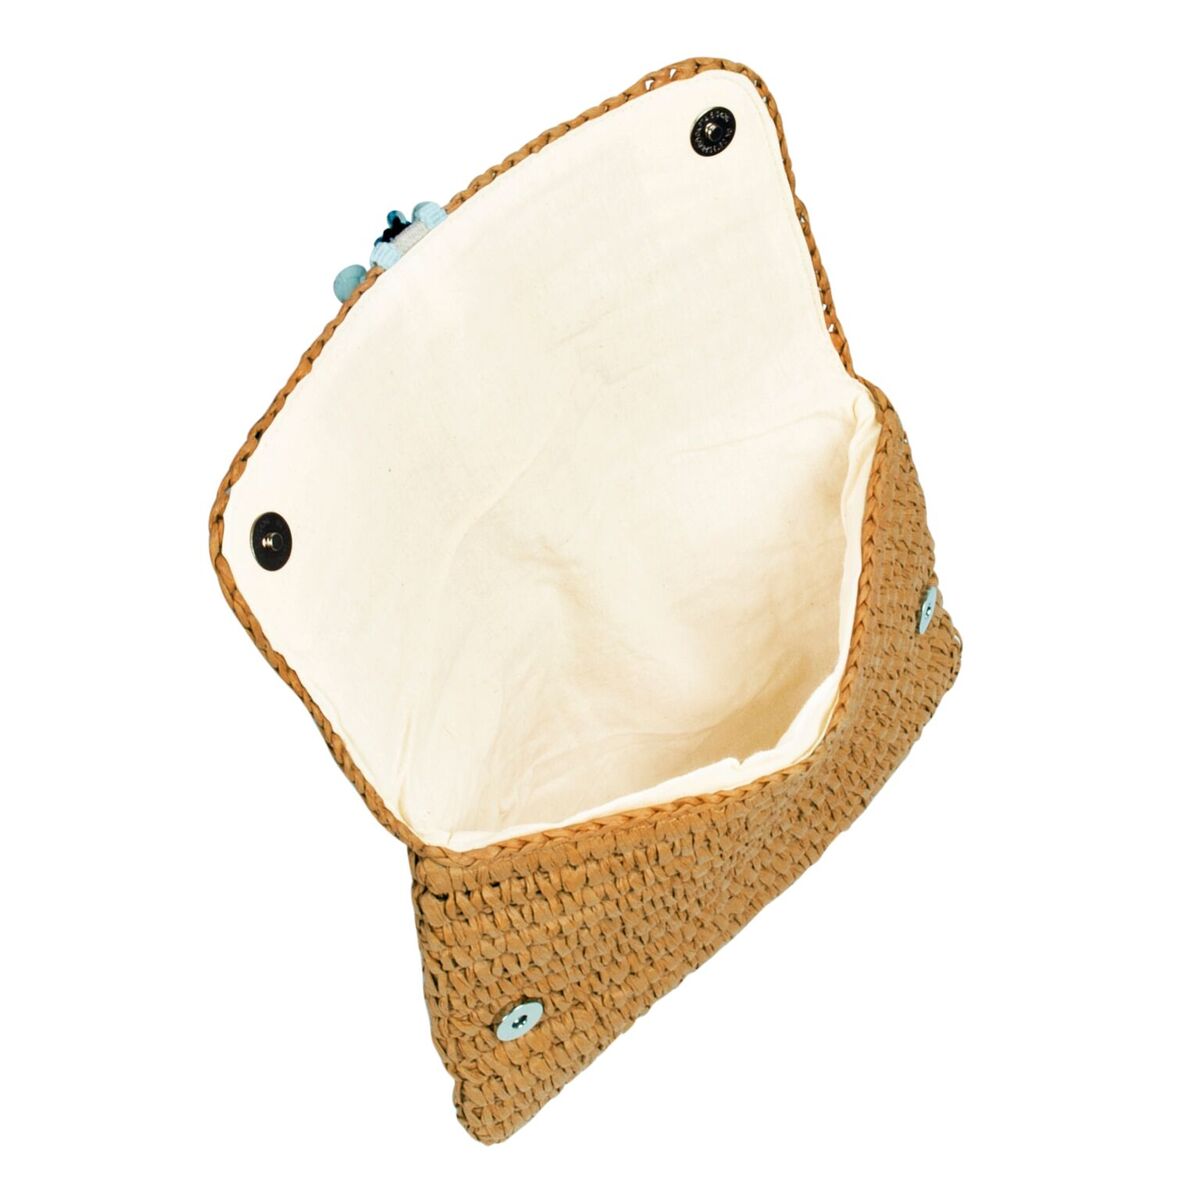 FENBEN Bamboo Handbag, Beach Purse Half Moon Bag, Straw Lace Woven